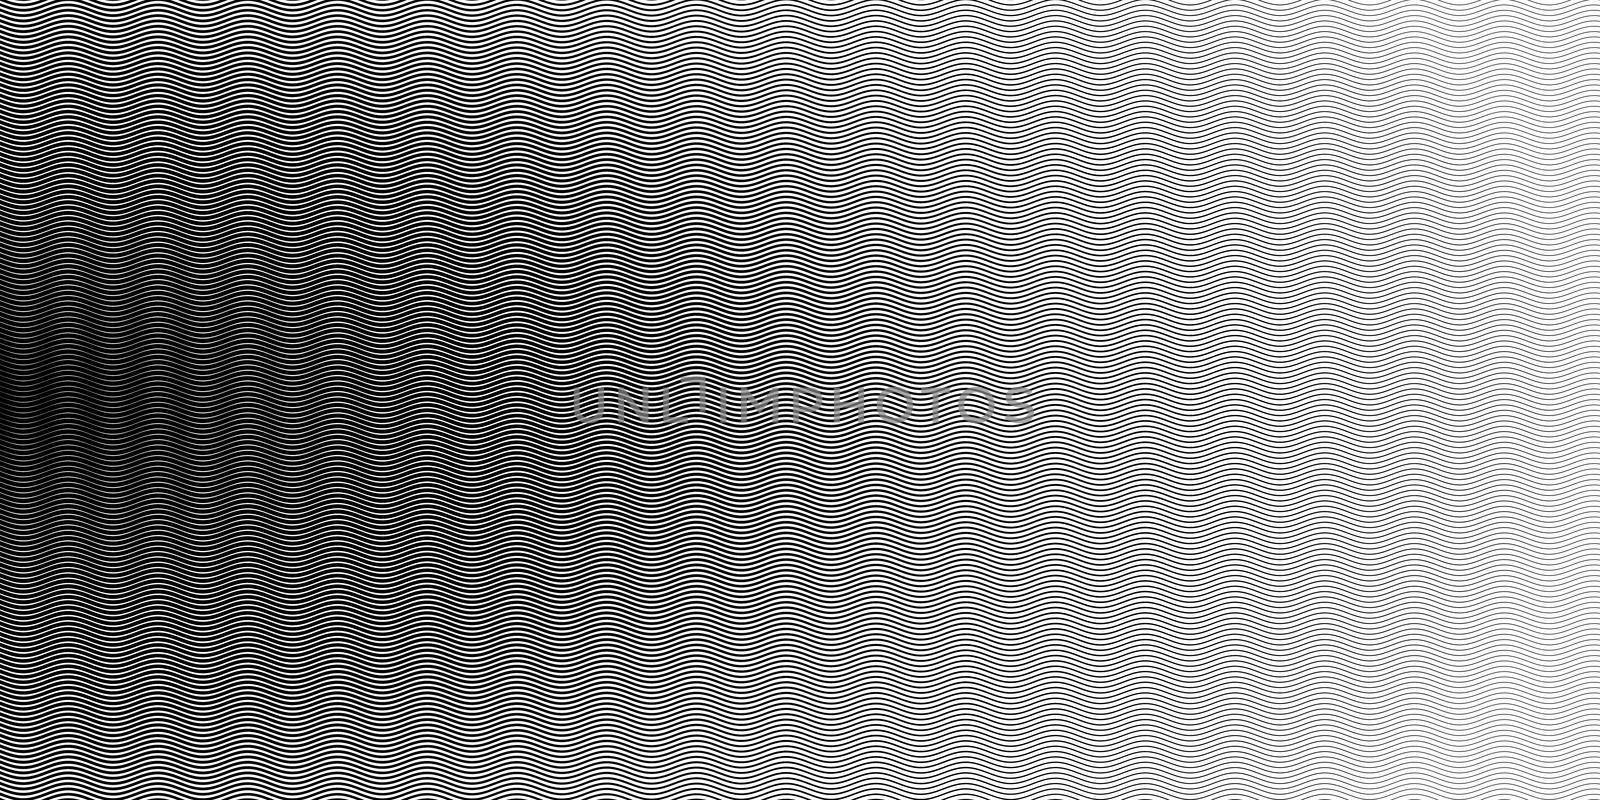 Wavy abstract gradient illustration by dutourdumonde